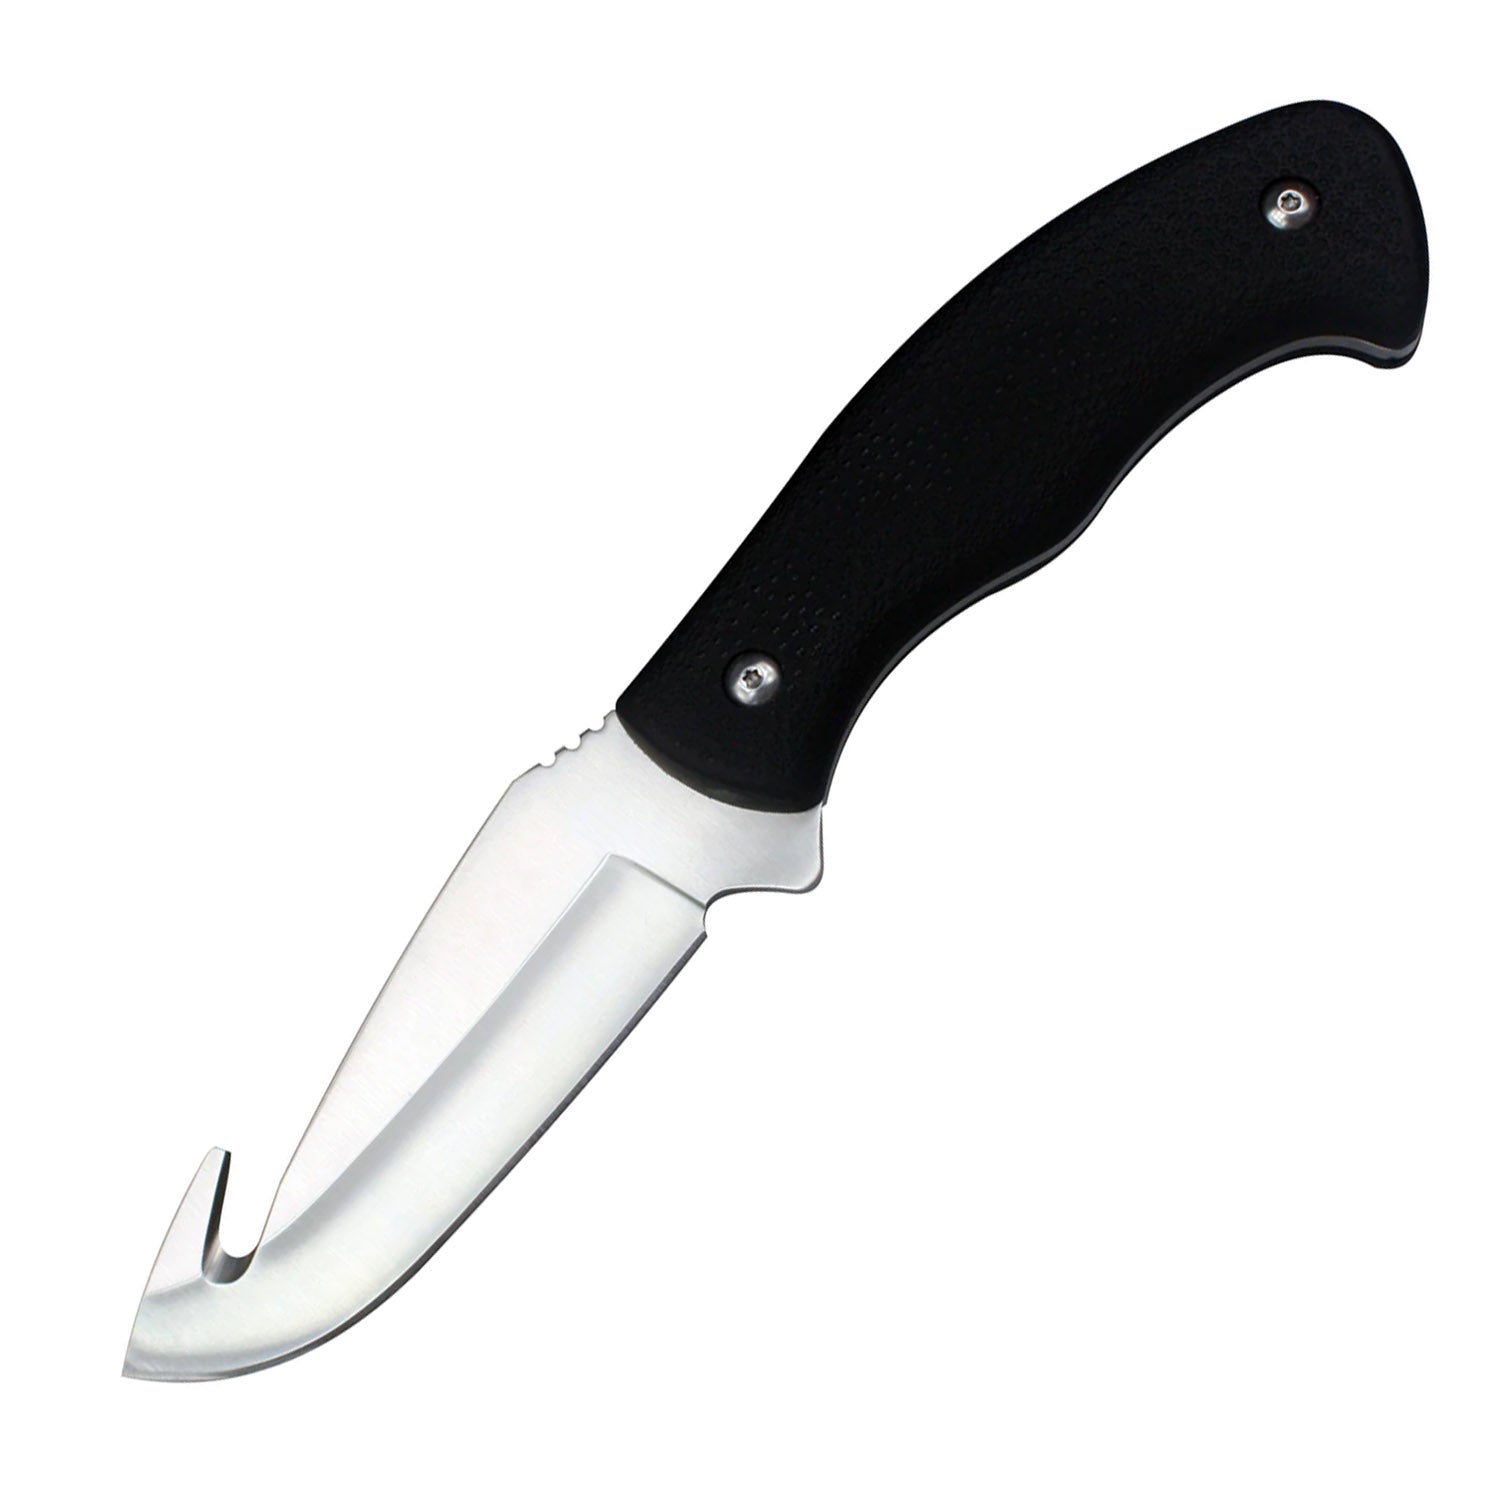 Black hunting knife with hook and nylon sheath - 0